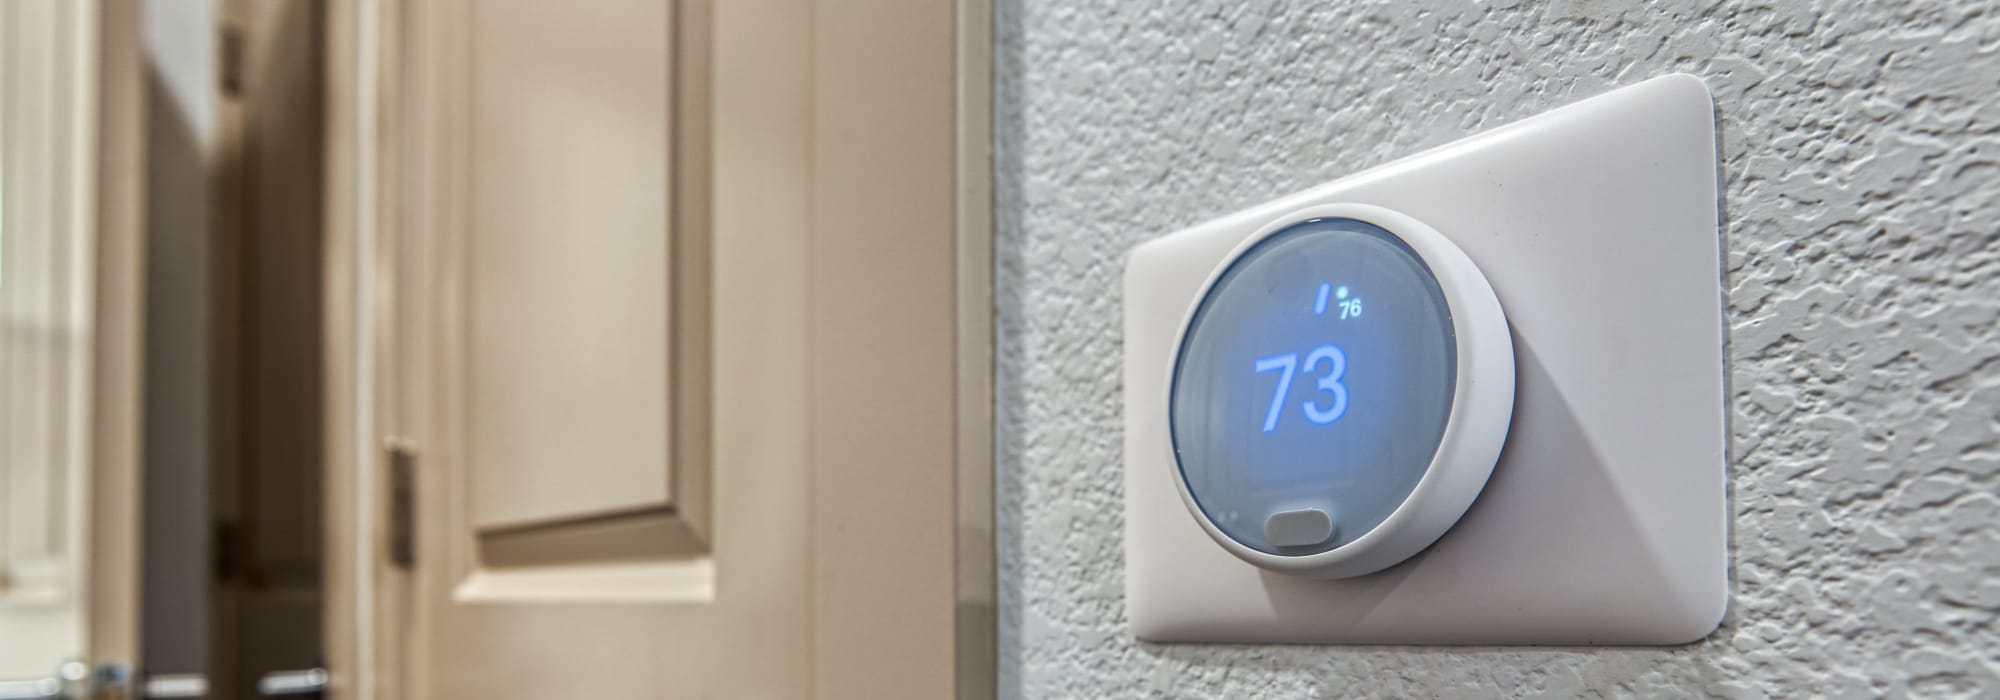 Nest Smart thermostat at Alexan Tempe in Tempe, Arizona